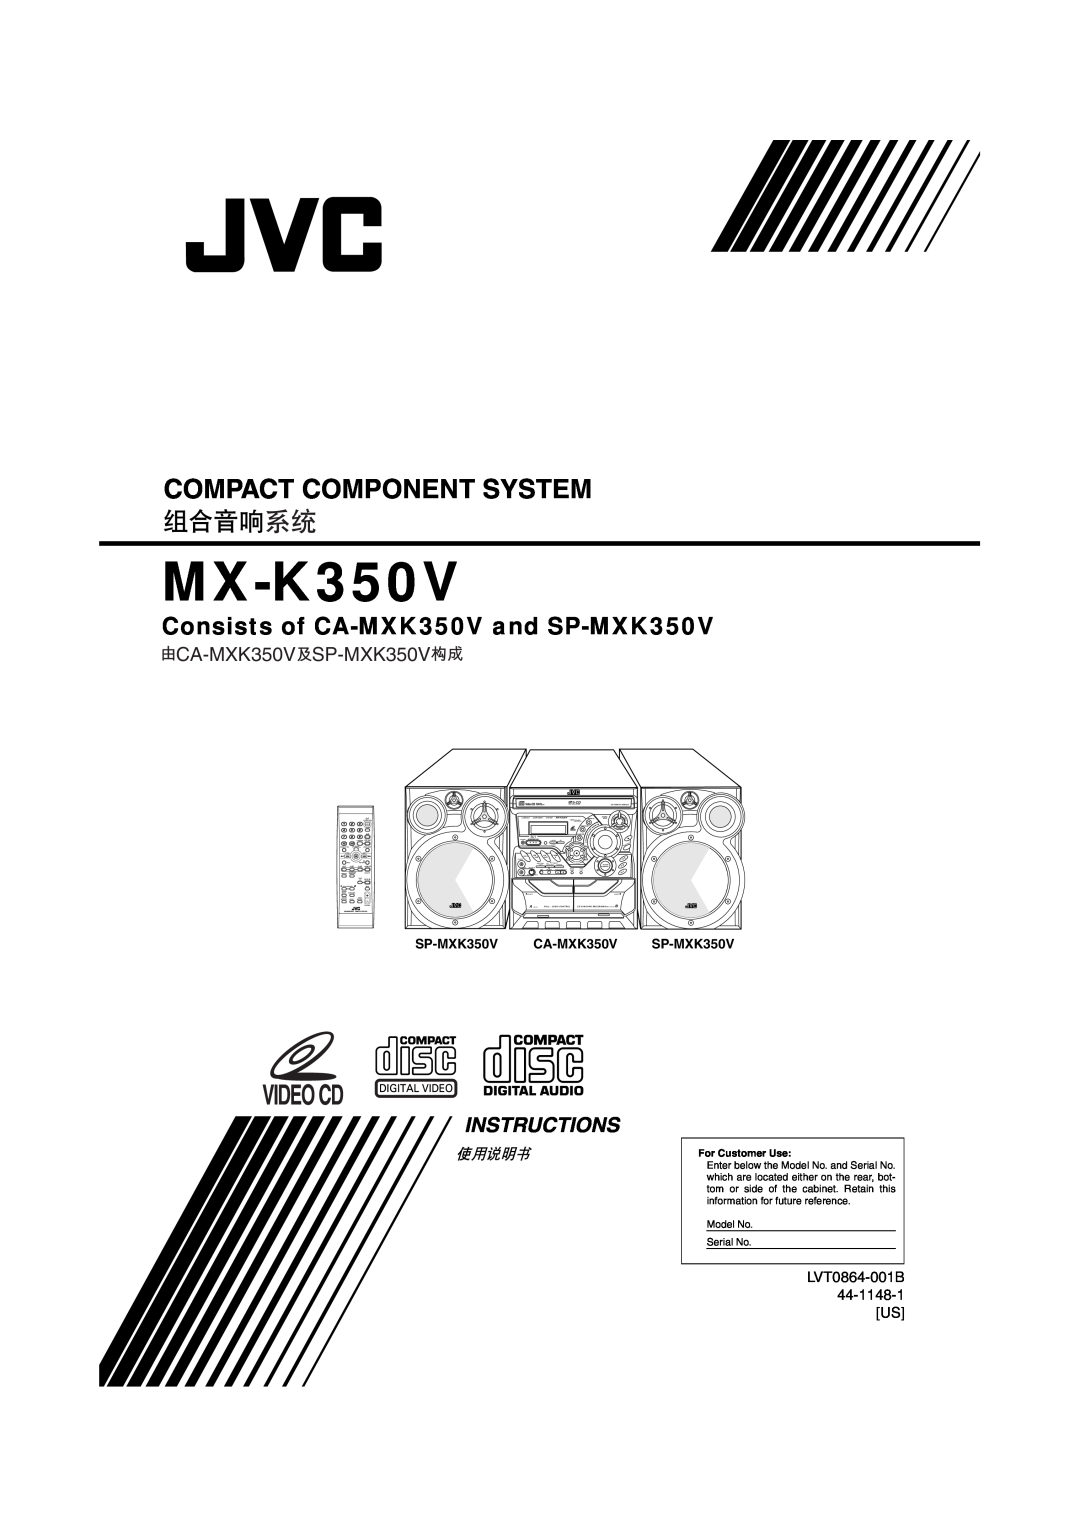 JVC MX-K350V manual Instructions, Compact Component System, Consists of CA-MXK350Vand SP-MXK350V, CA-MXK350VSP-MXK350V 